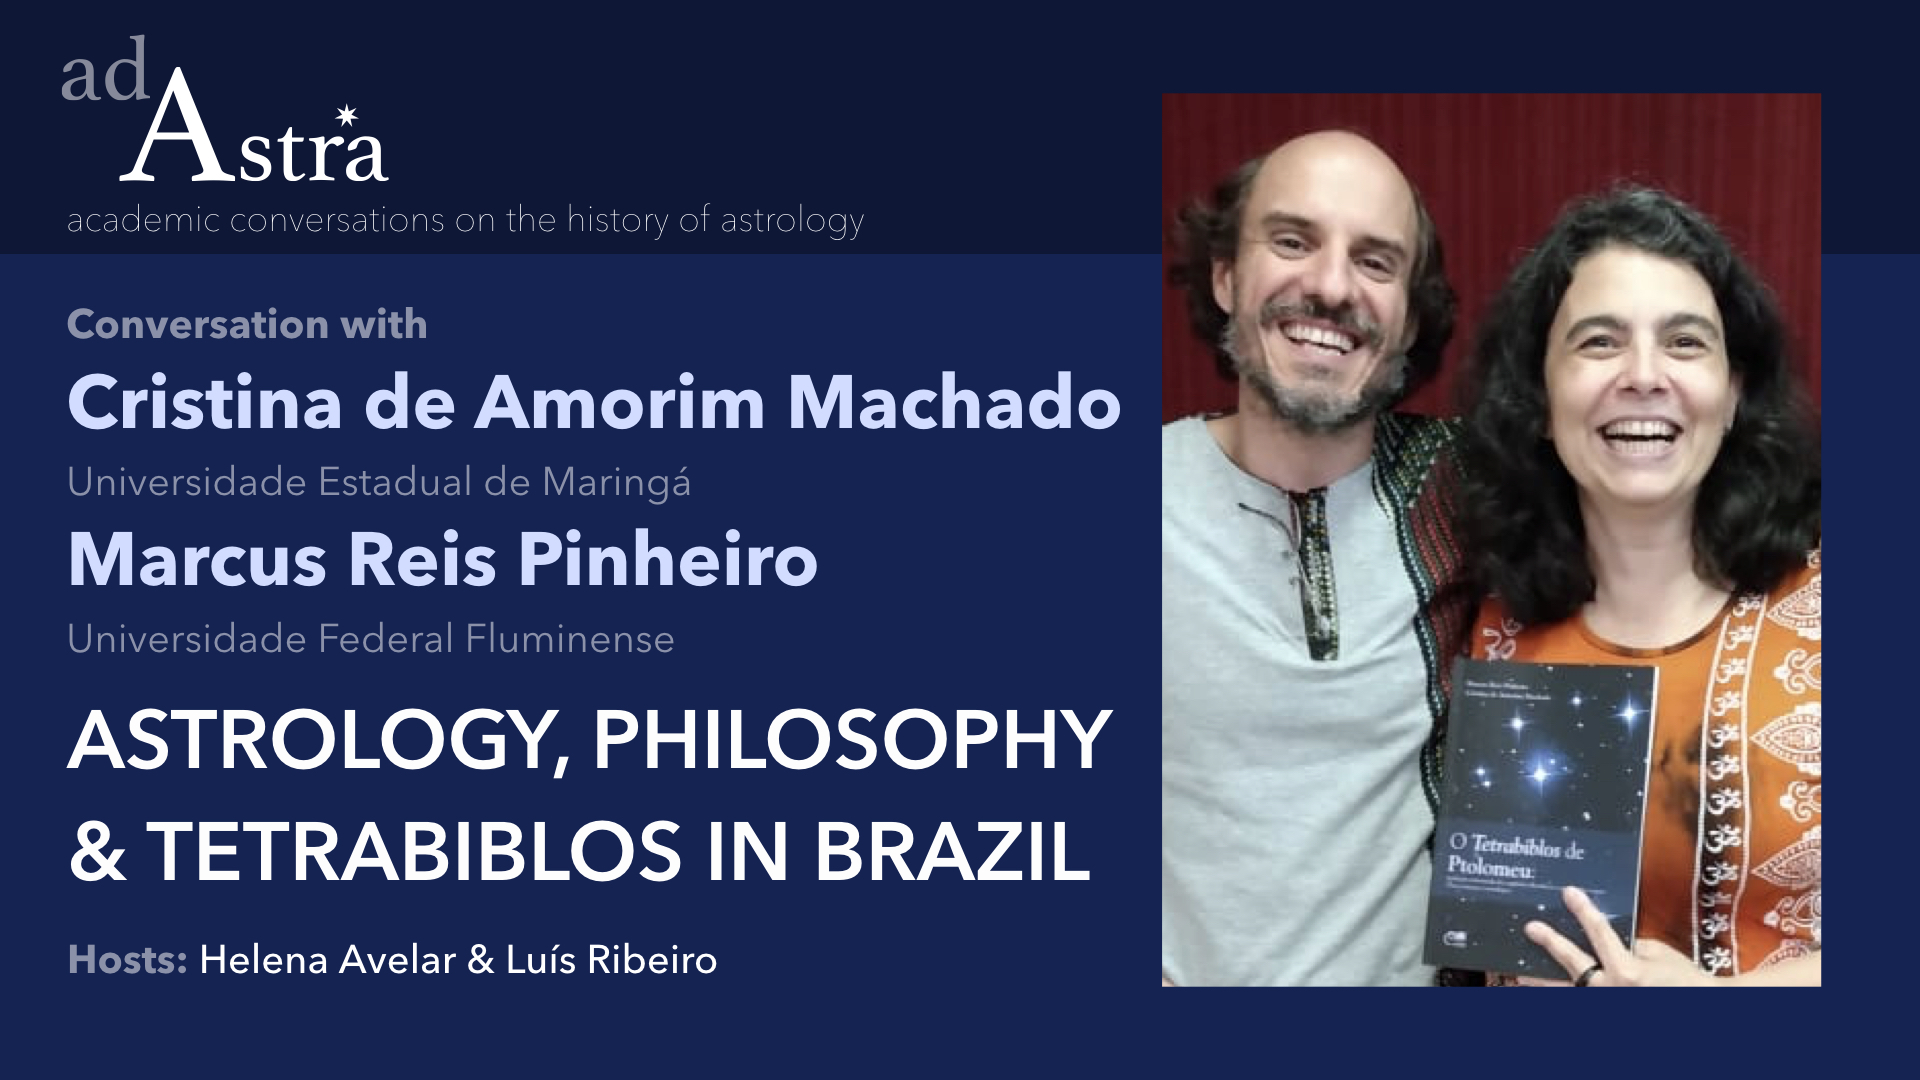 Astrology, Philosophy & Tetrabiblos in Brazil with Cristina de Amorim Machado & Marcus Reis